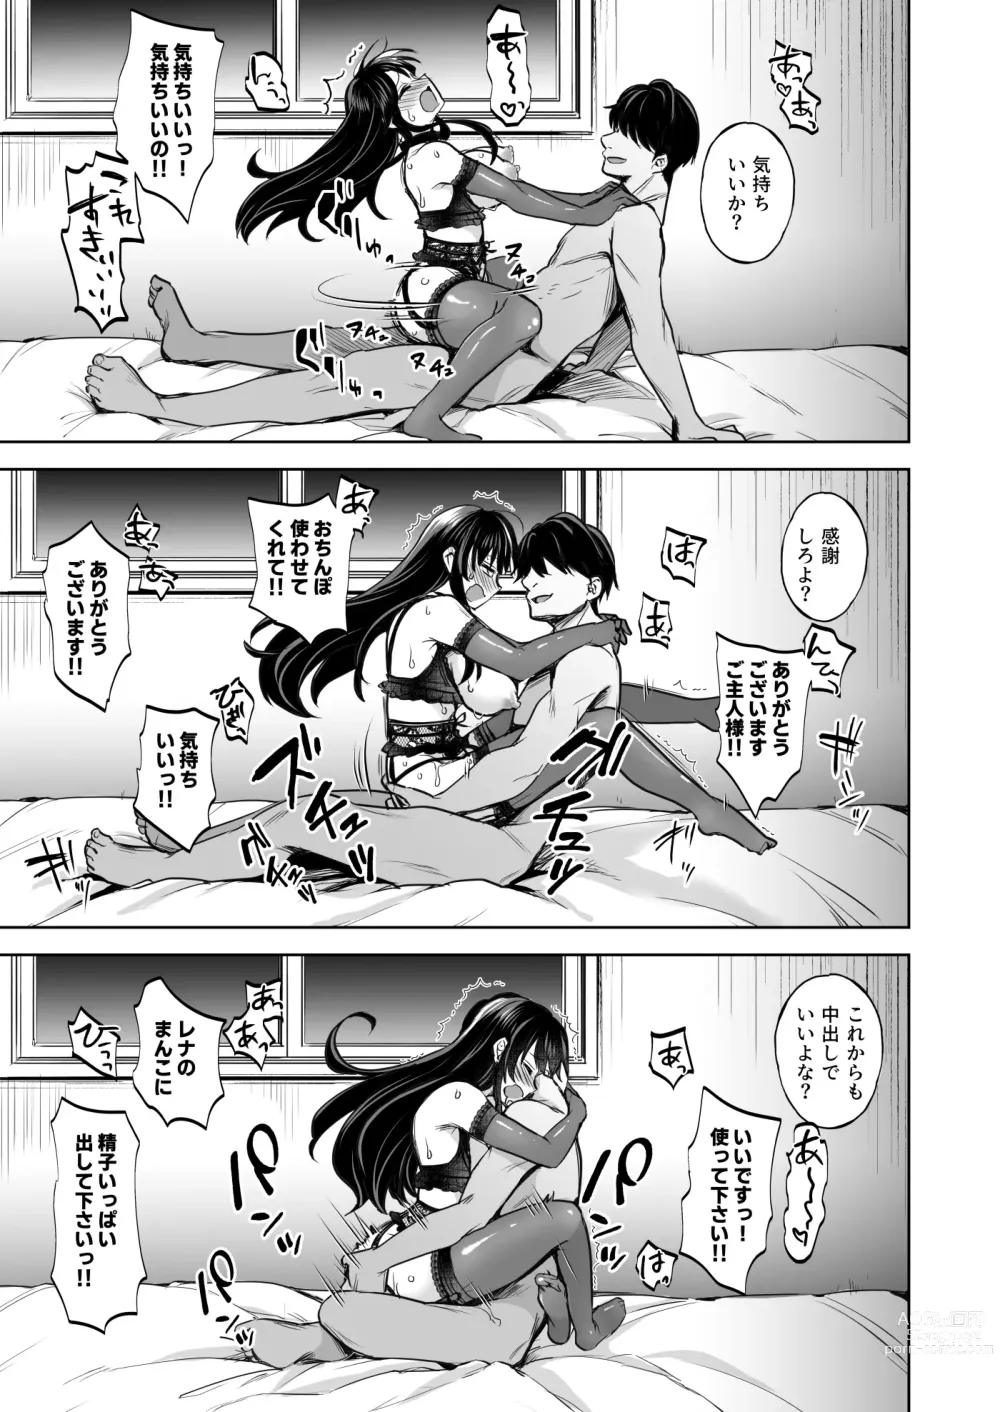 Page 10 of doujinshi Omoide wa Yogosareru 1.5